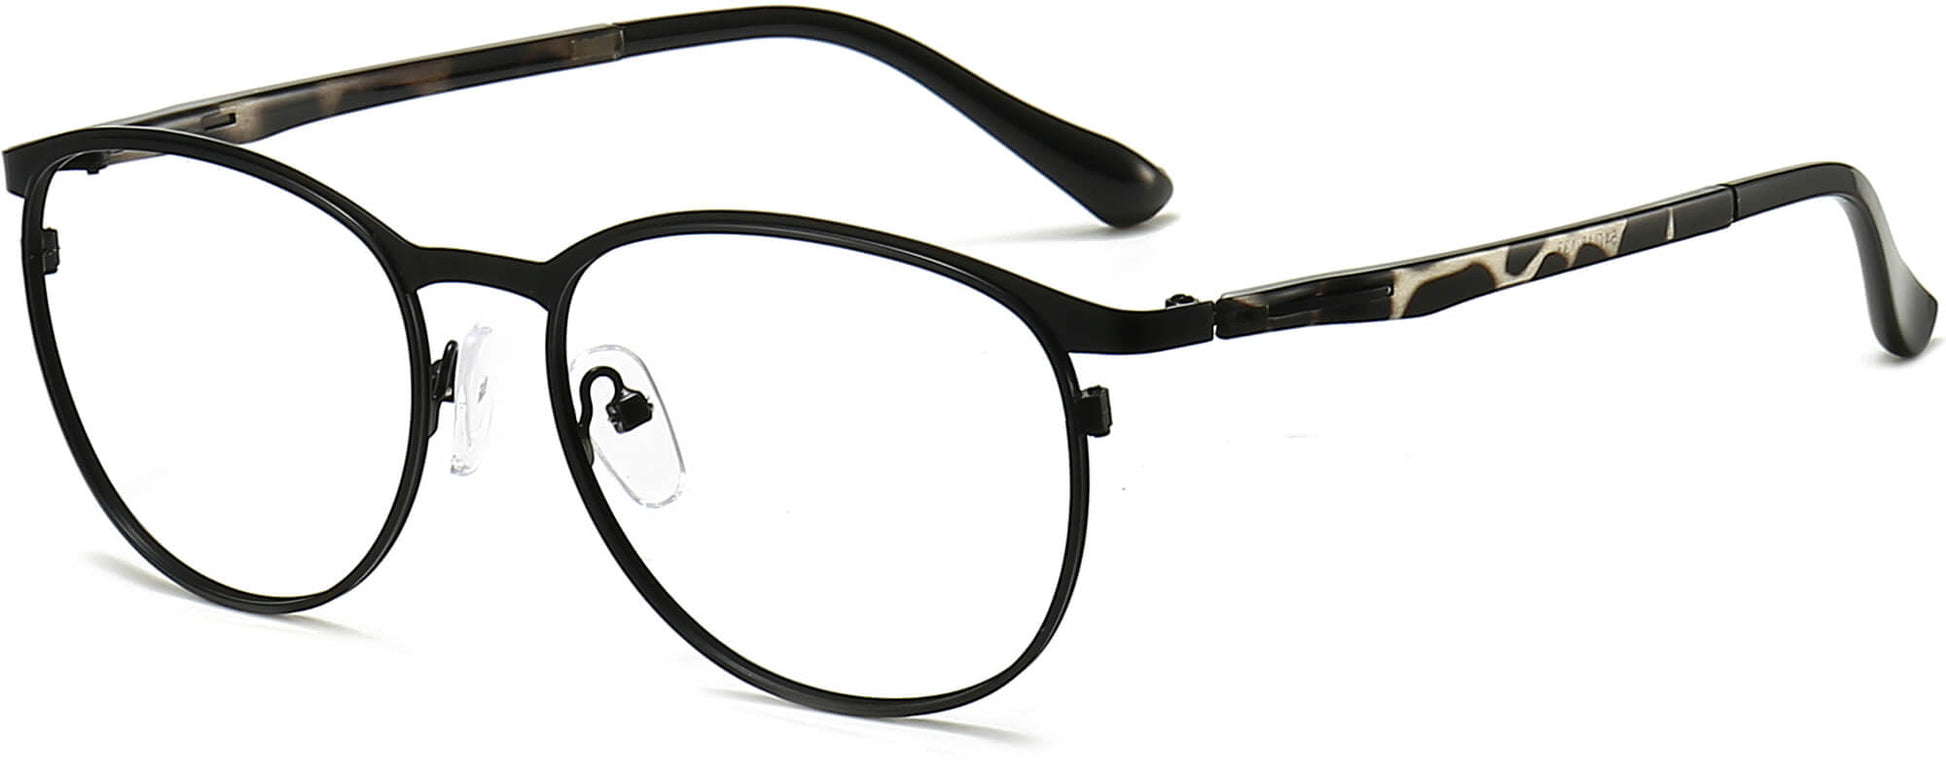 Sienna Round Black Eyeglasses from ANRRI, angle view